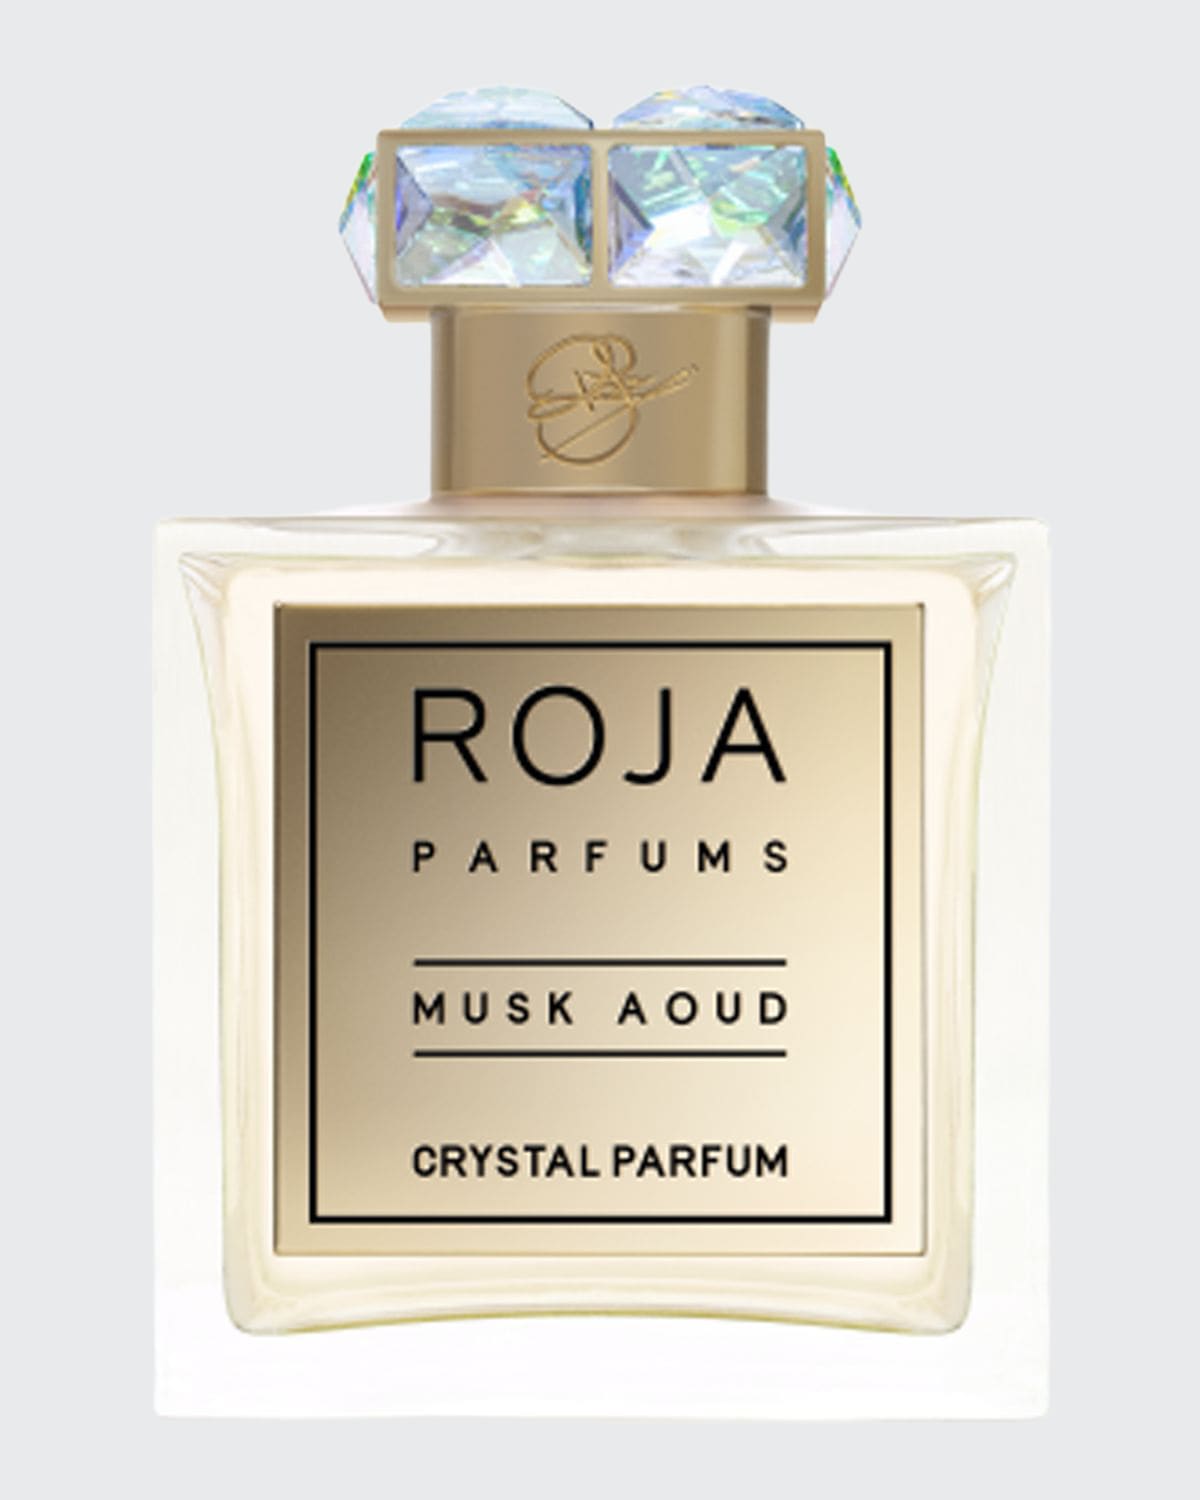 Musk Aoud Crystal Parfum, 3.4 oz.